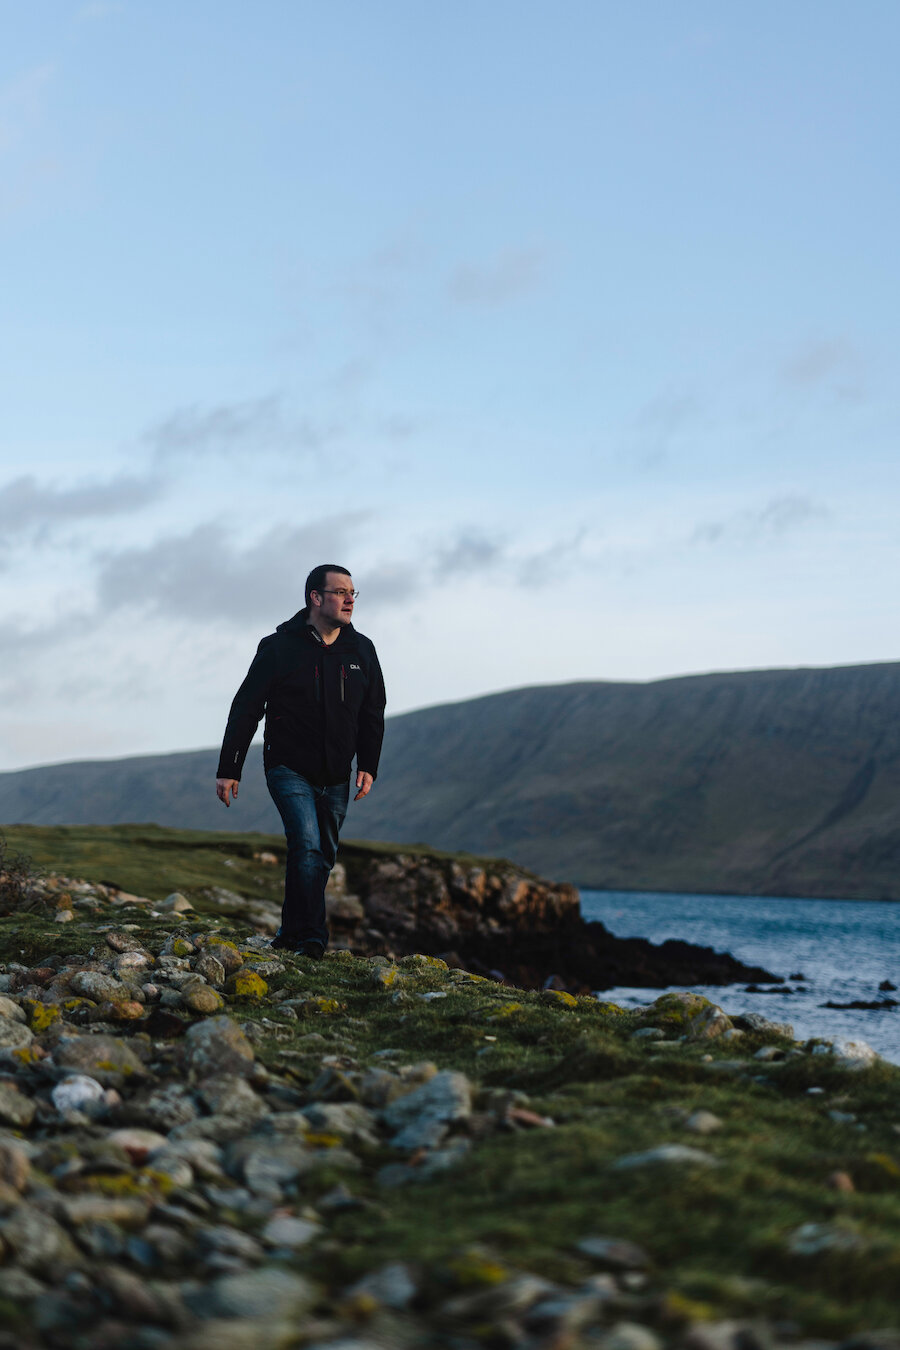 Simon Pallant enjoys a walk along the coastline to wind down from work.